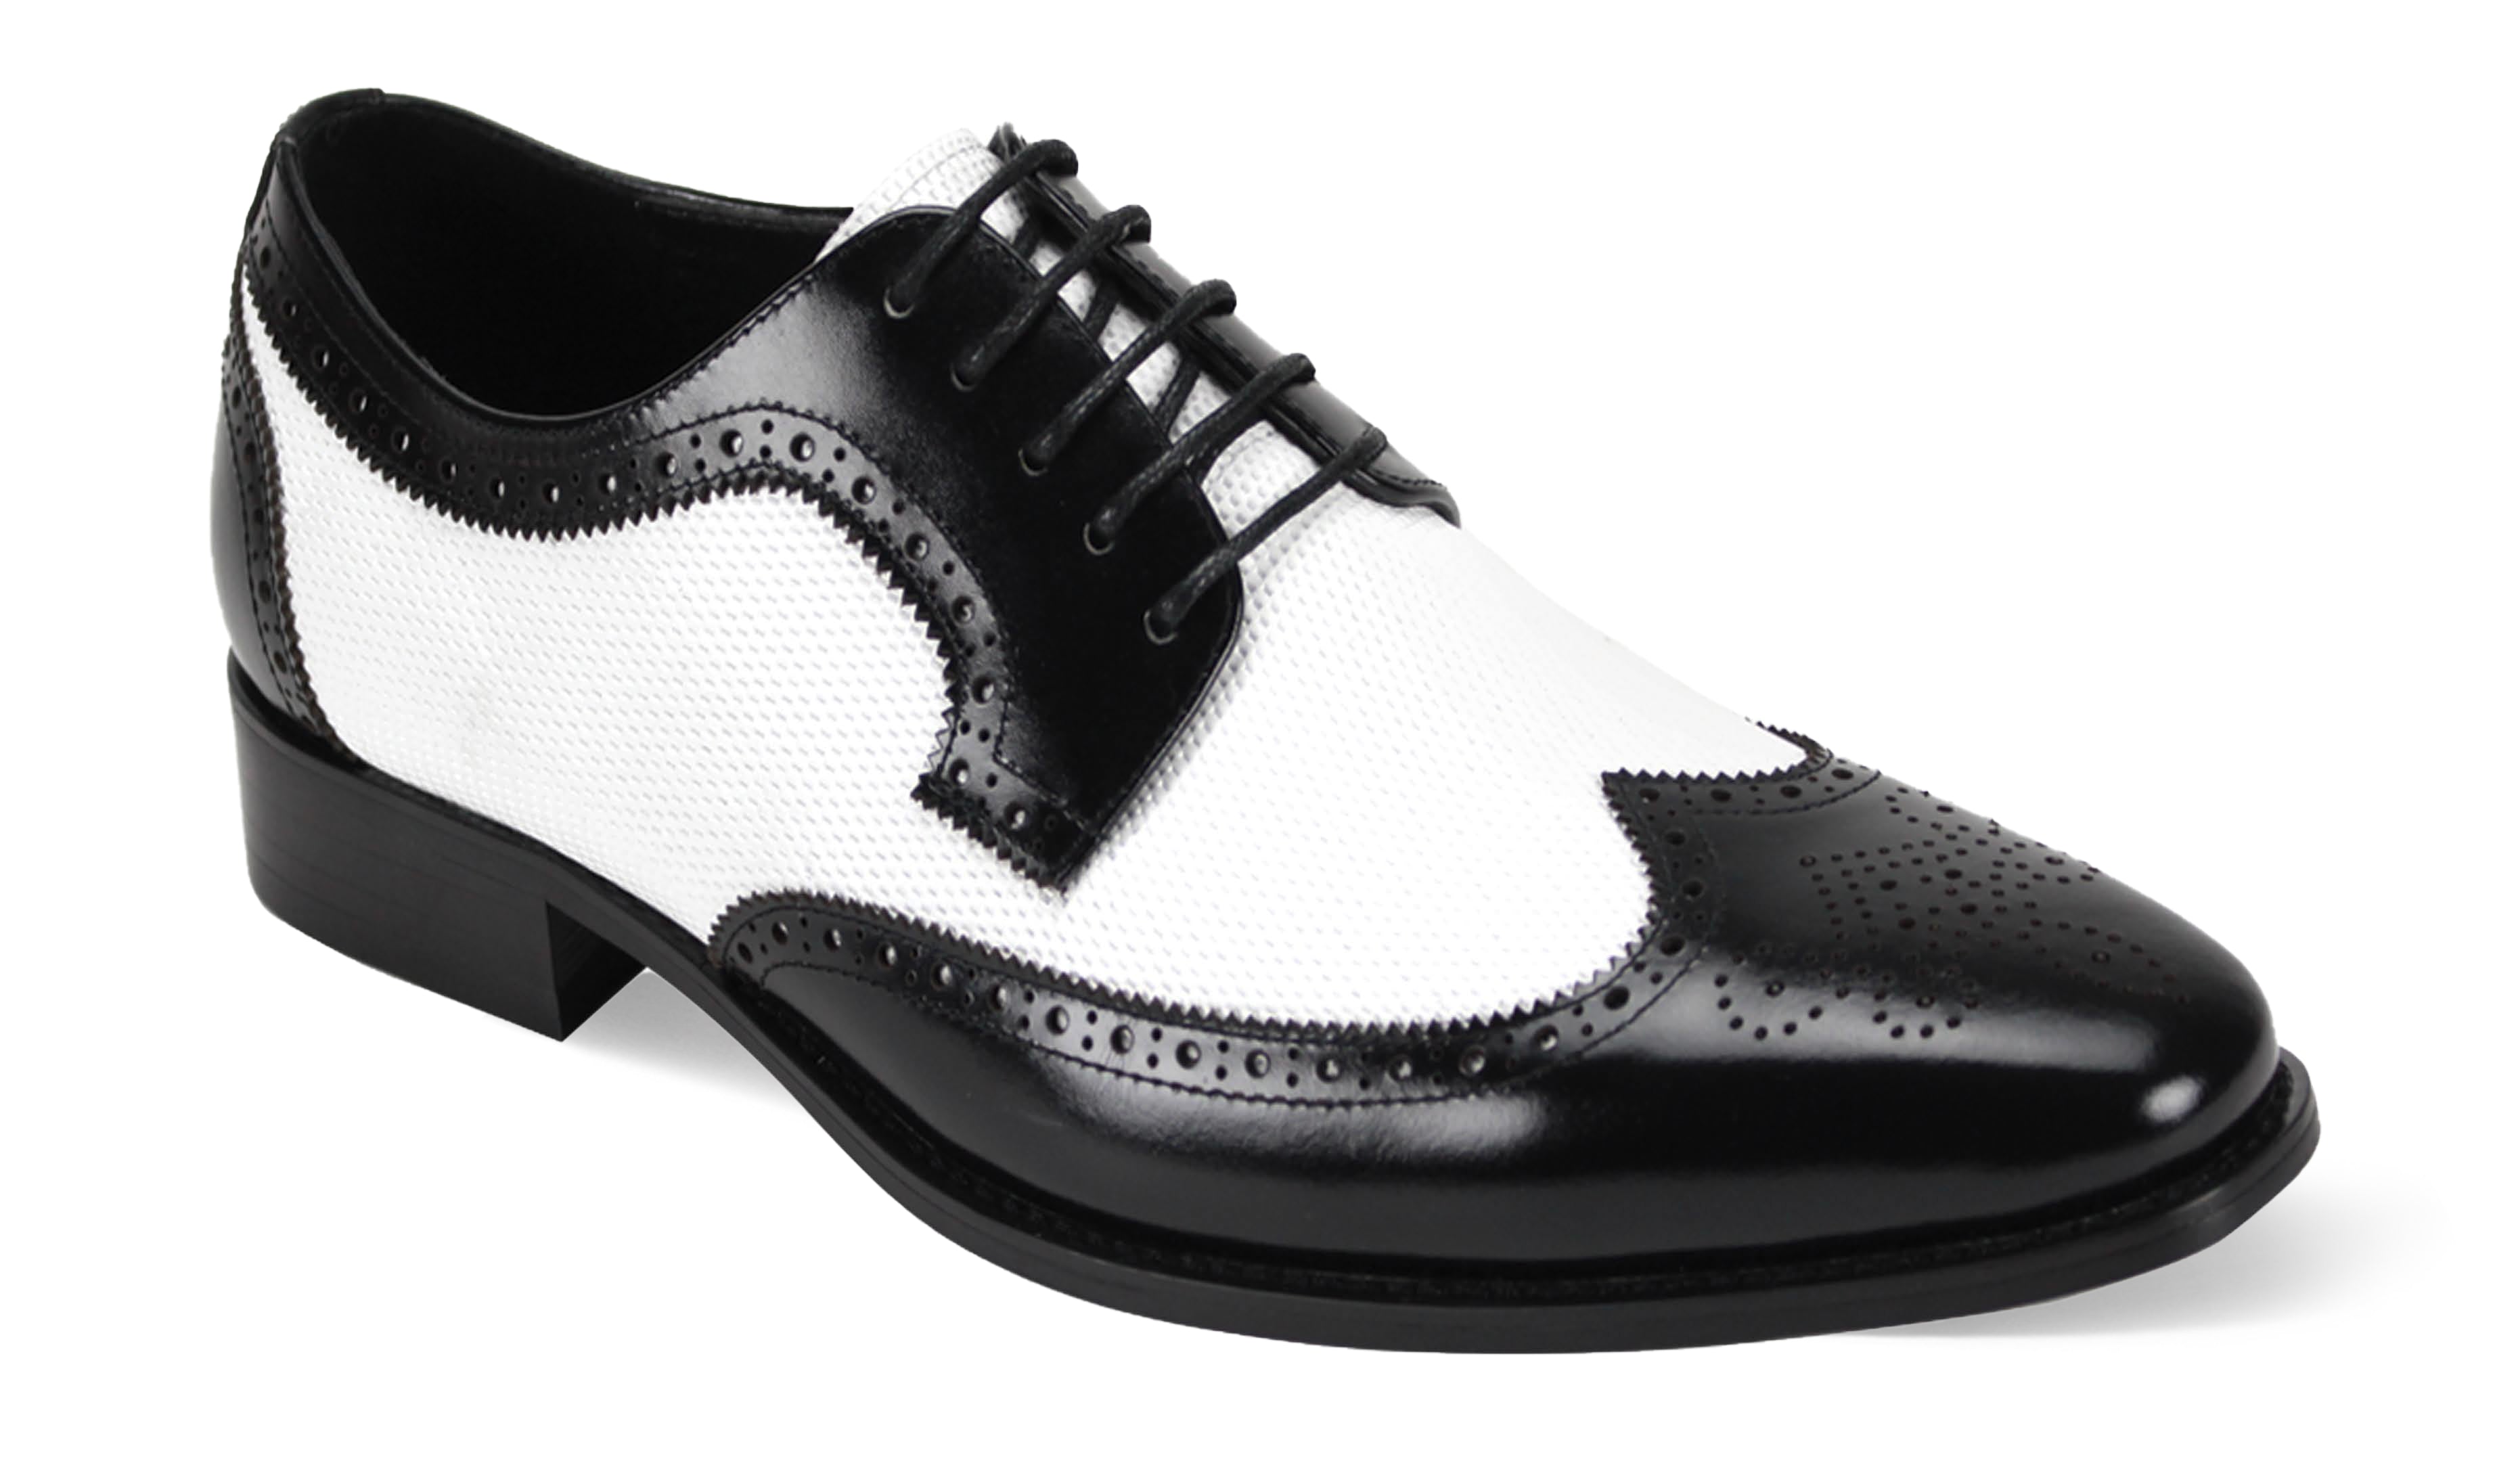 Giorgio Venturi 6881 Black/White Leather Shoes